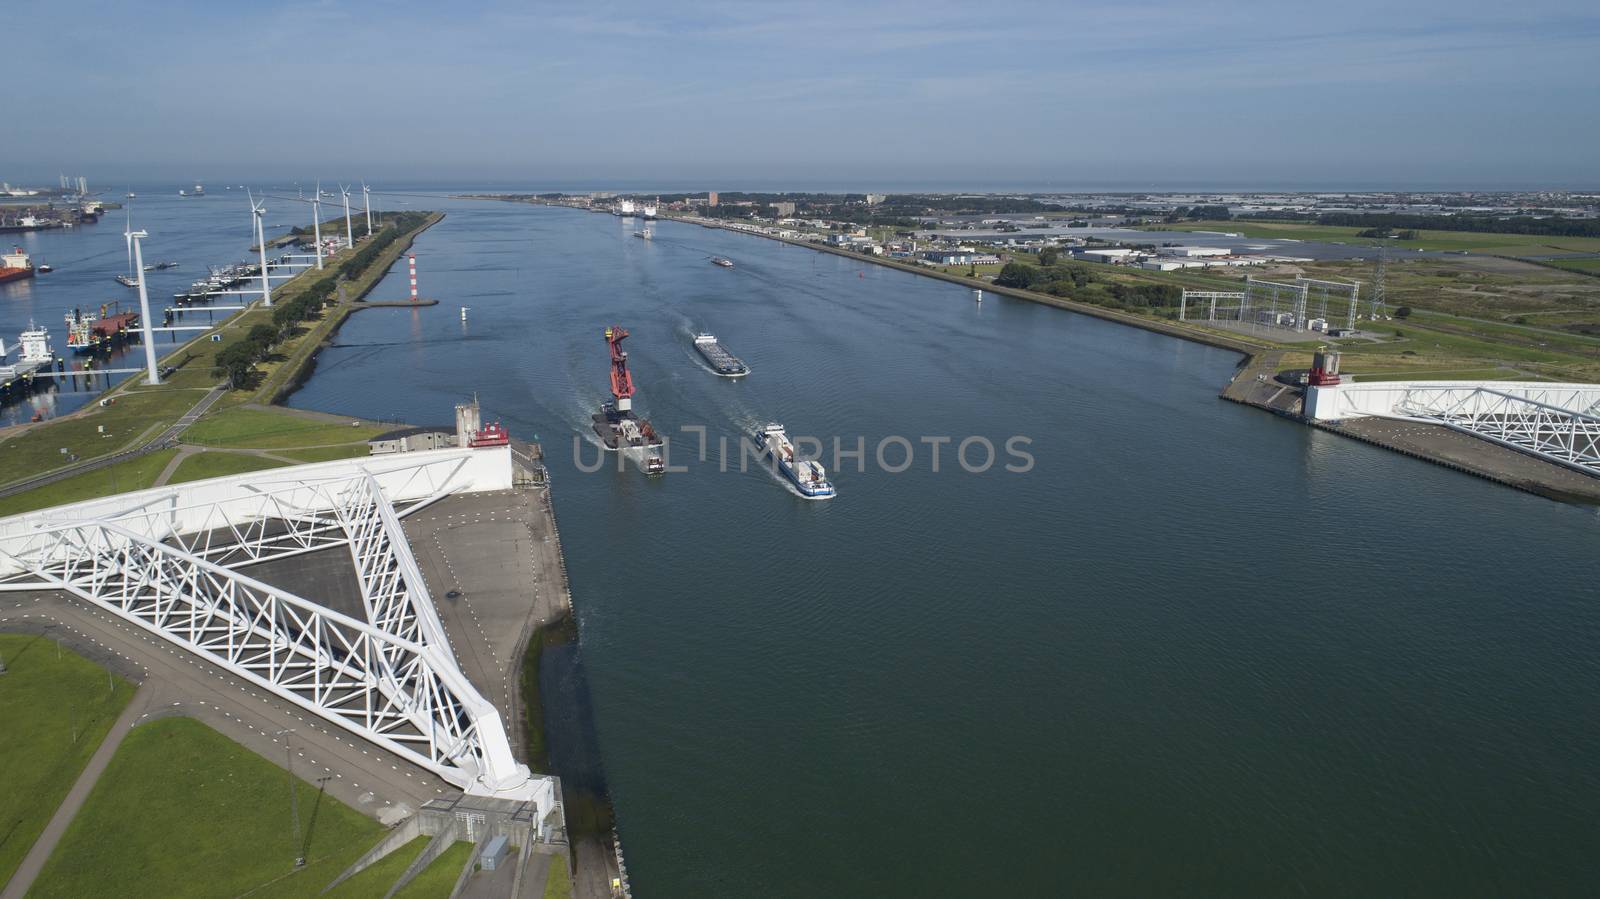 Aerial picture of Maeslantkering storm surge barrier on the Nieuwe Waterweg Netherlands